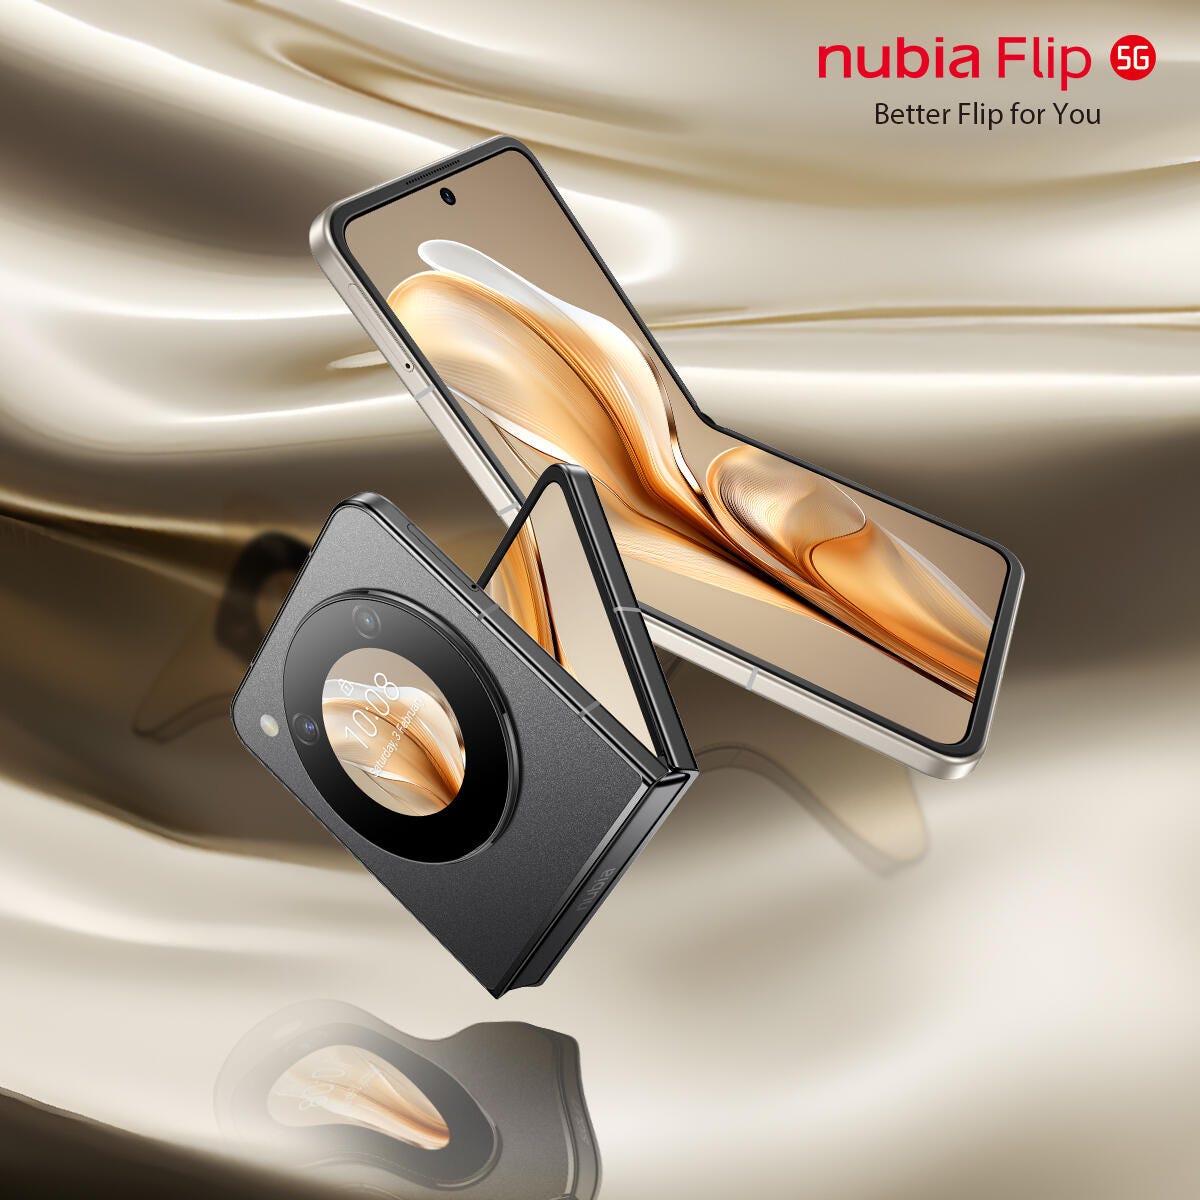 The Nubia Flip 5G